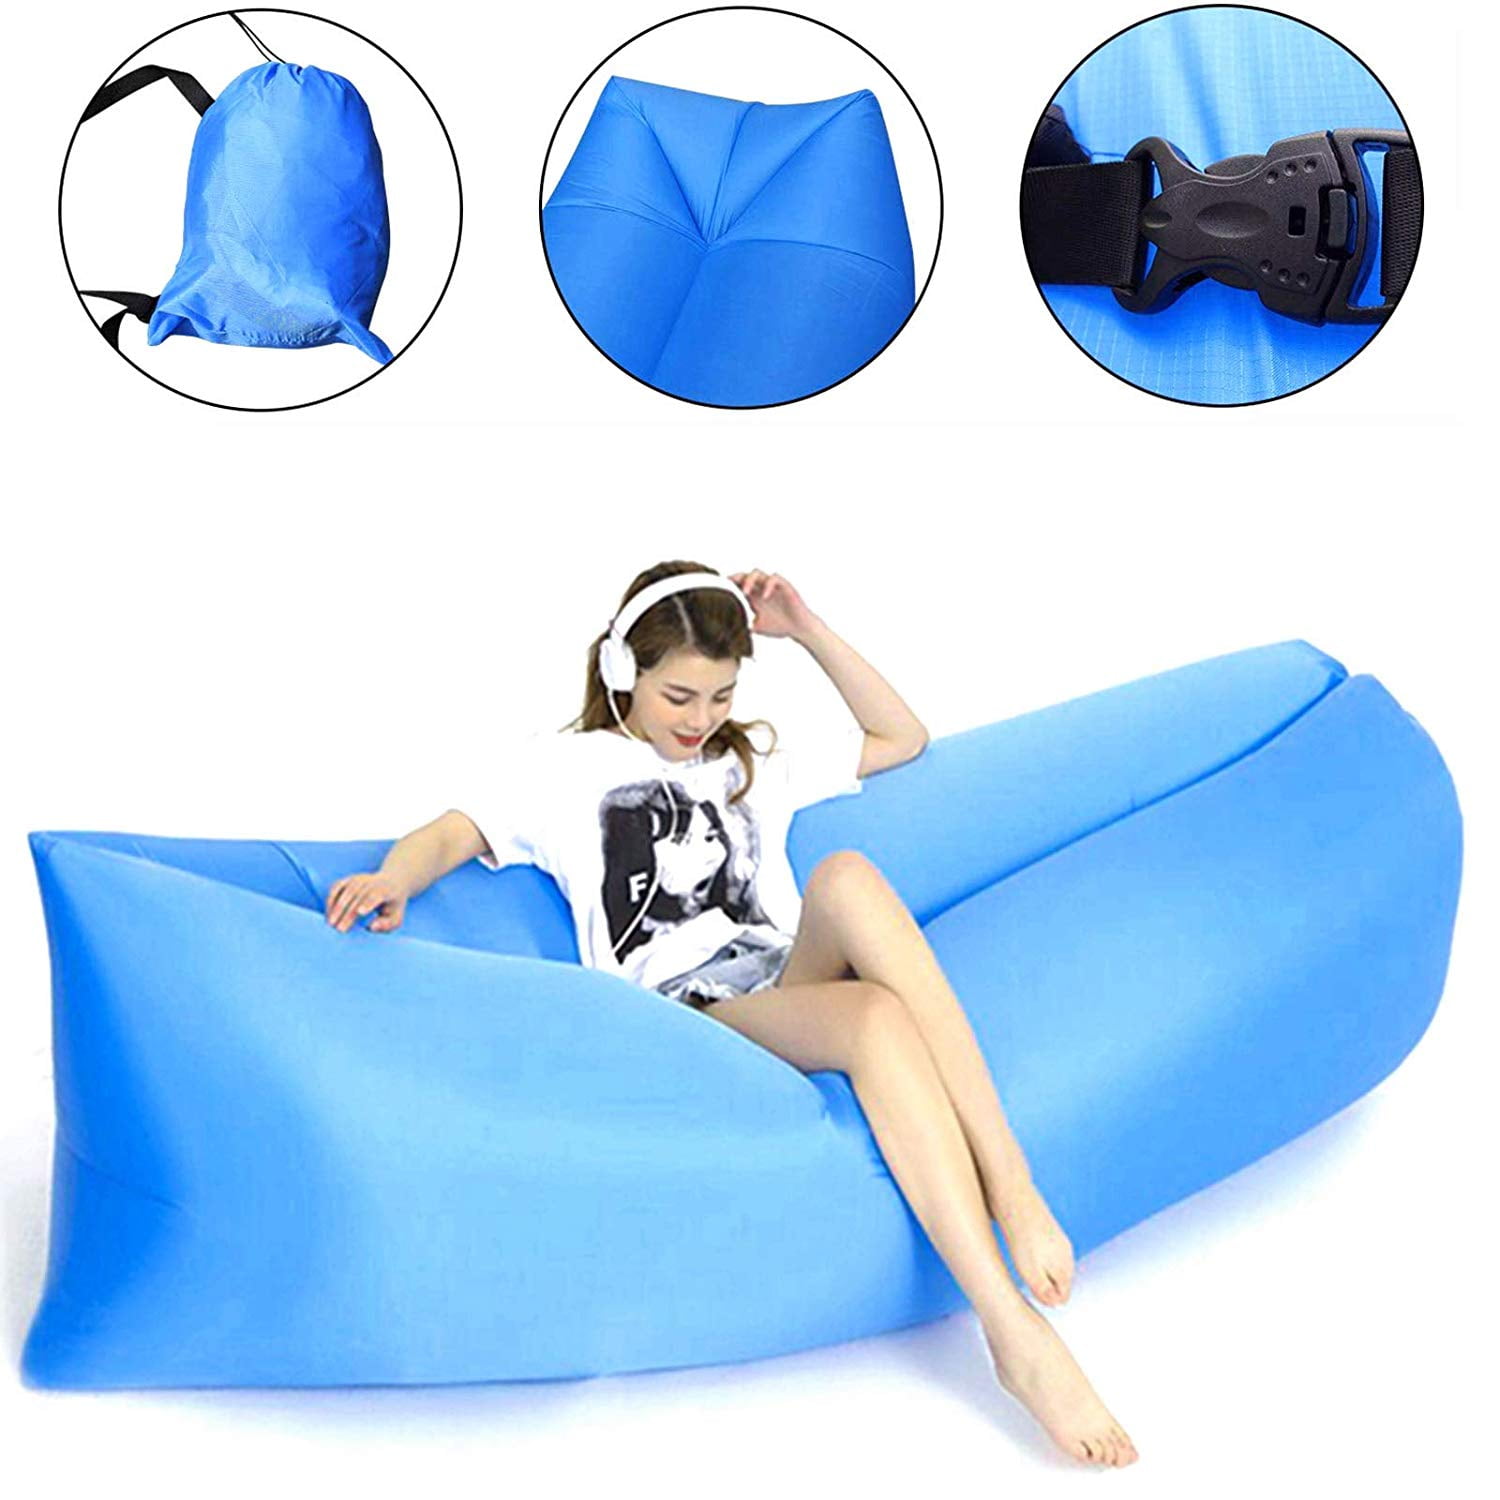 Portable Inflatable Lounger Air Sofa Outdoor Picnic Beach Mattress Mat Lazy Bed 